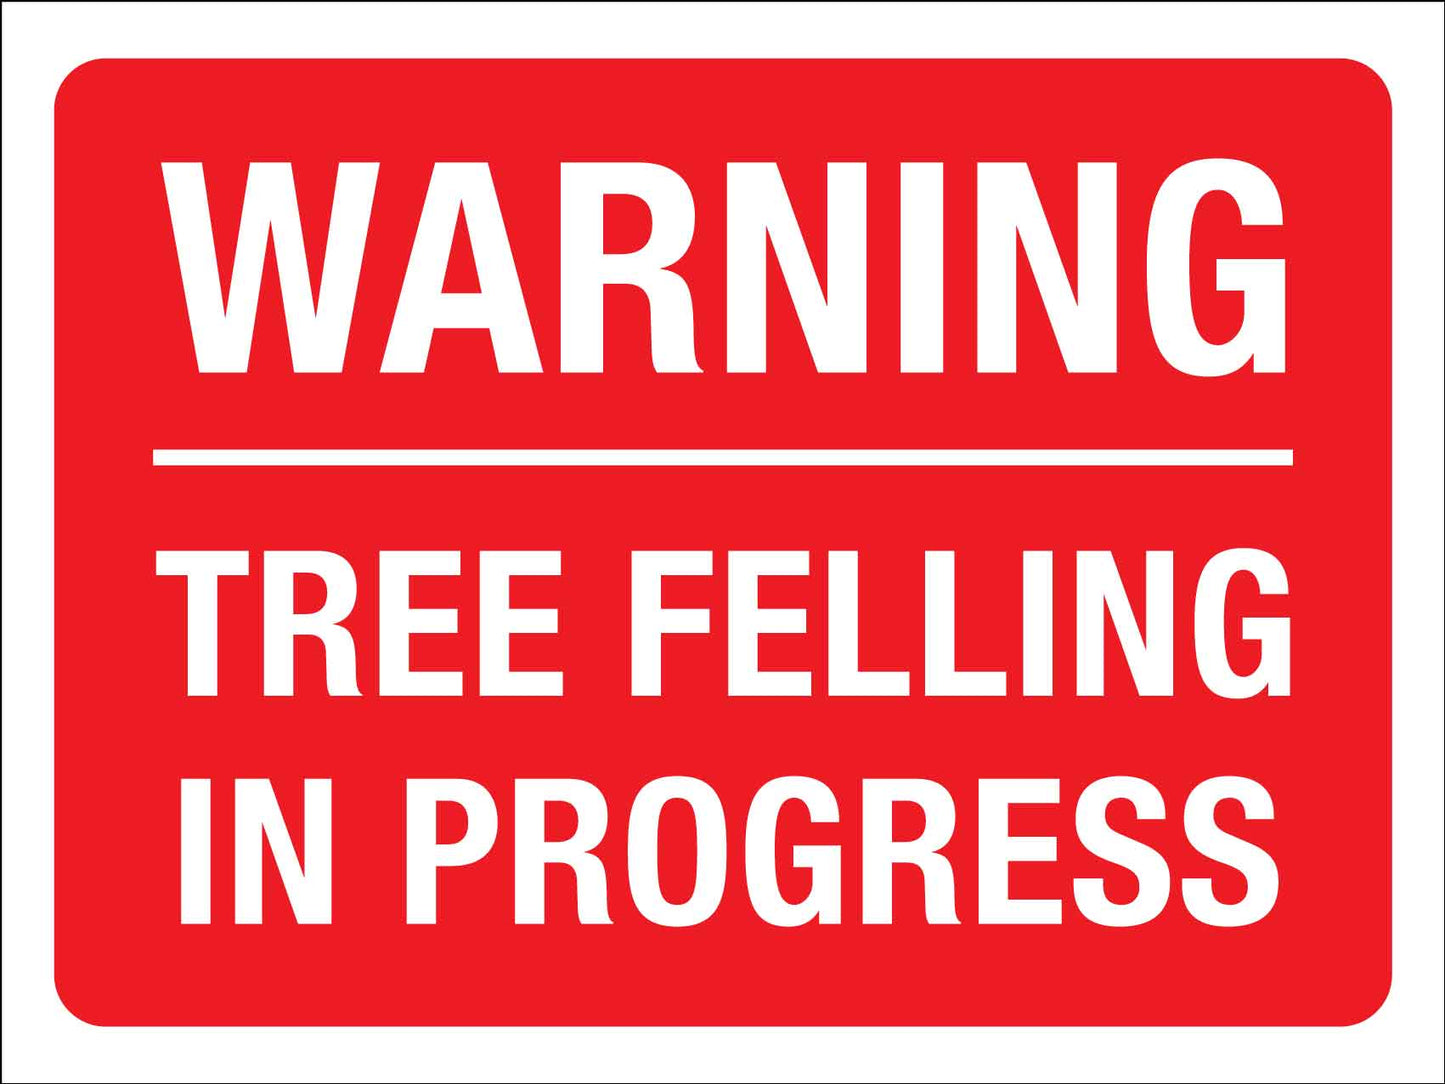 Warning Tree Felling In Progress Red Sign